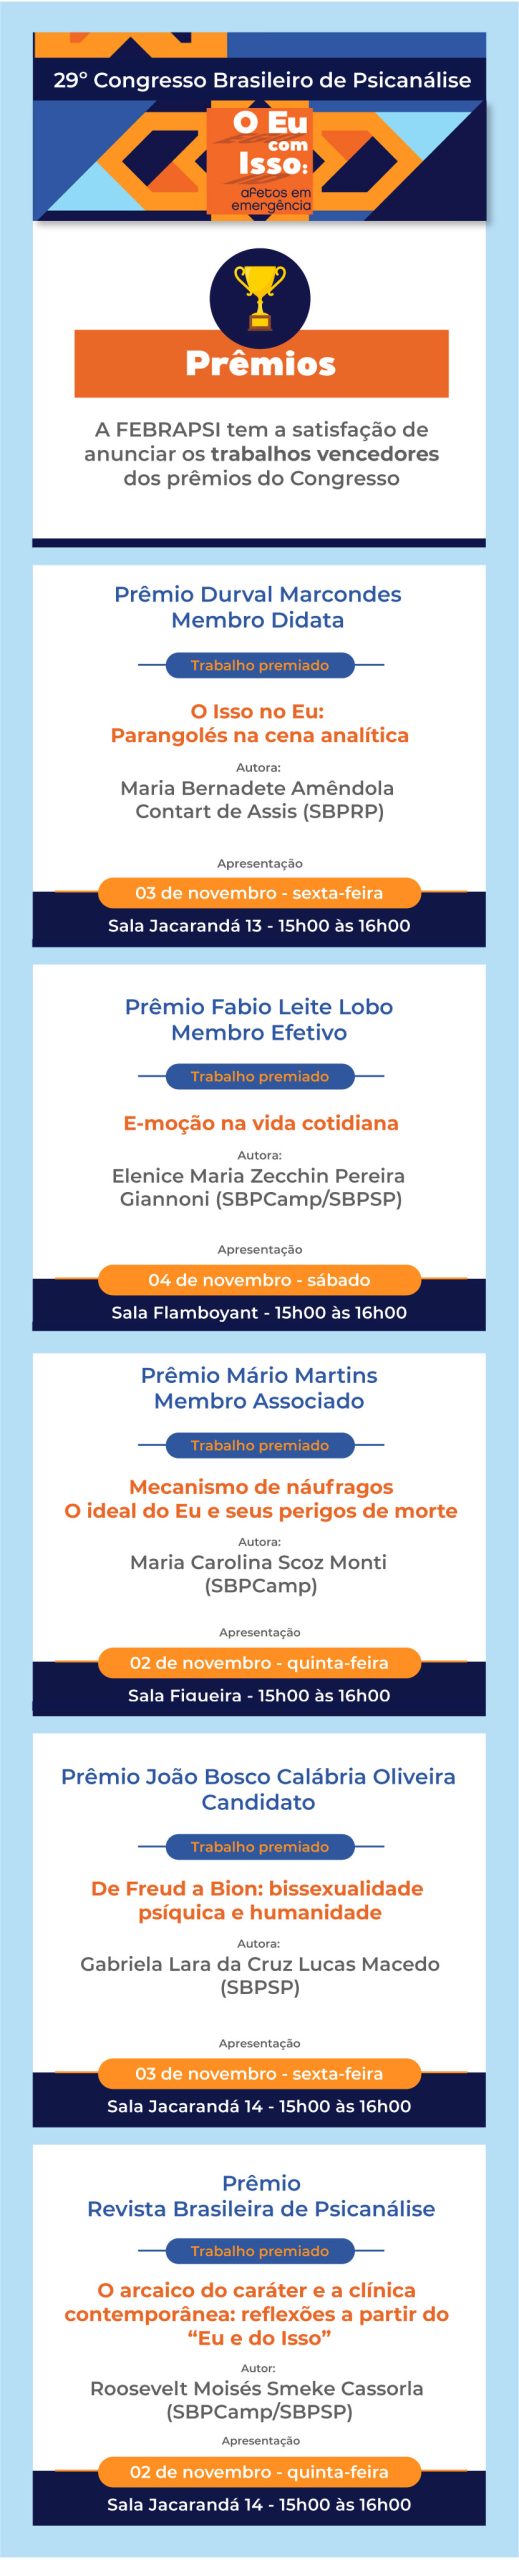 29º Congresso Brasileiro de Psicanálise - FEBRAPSI